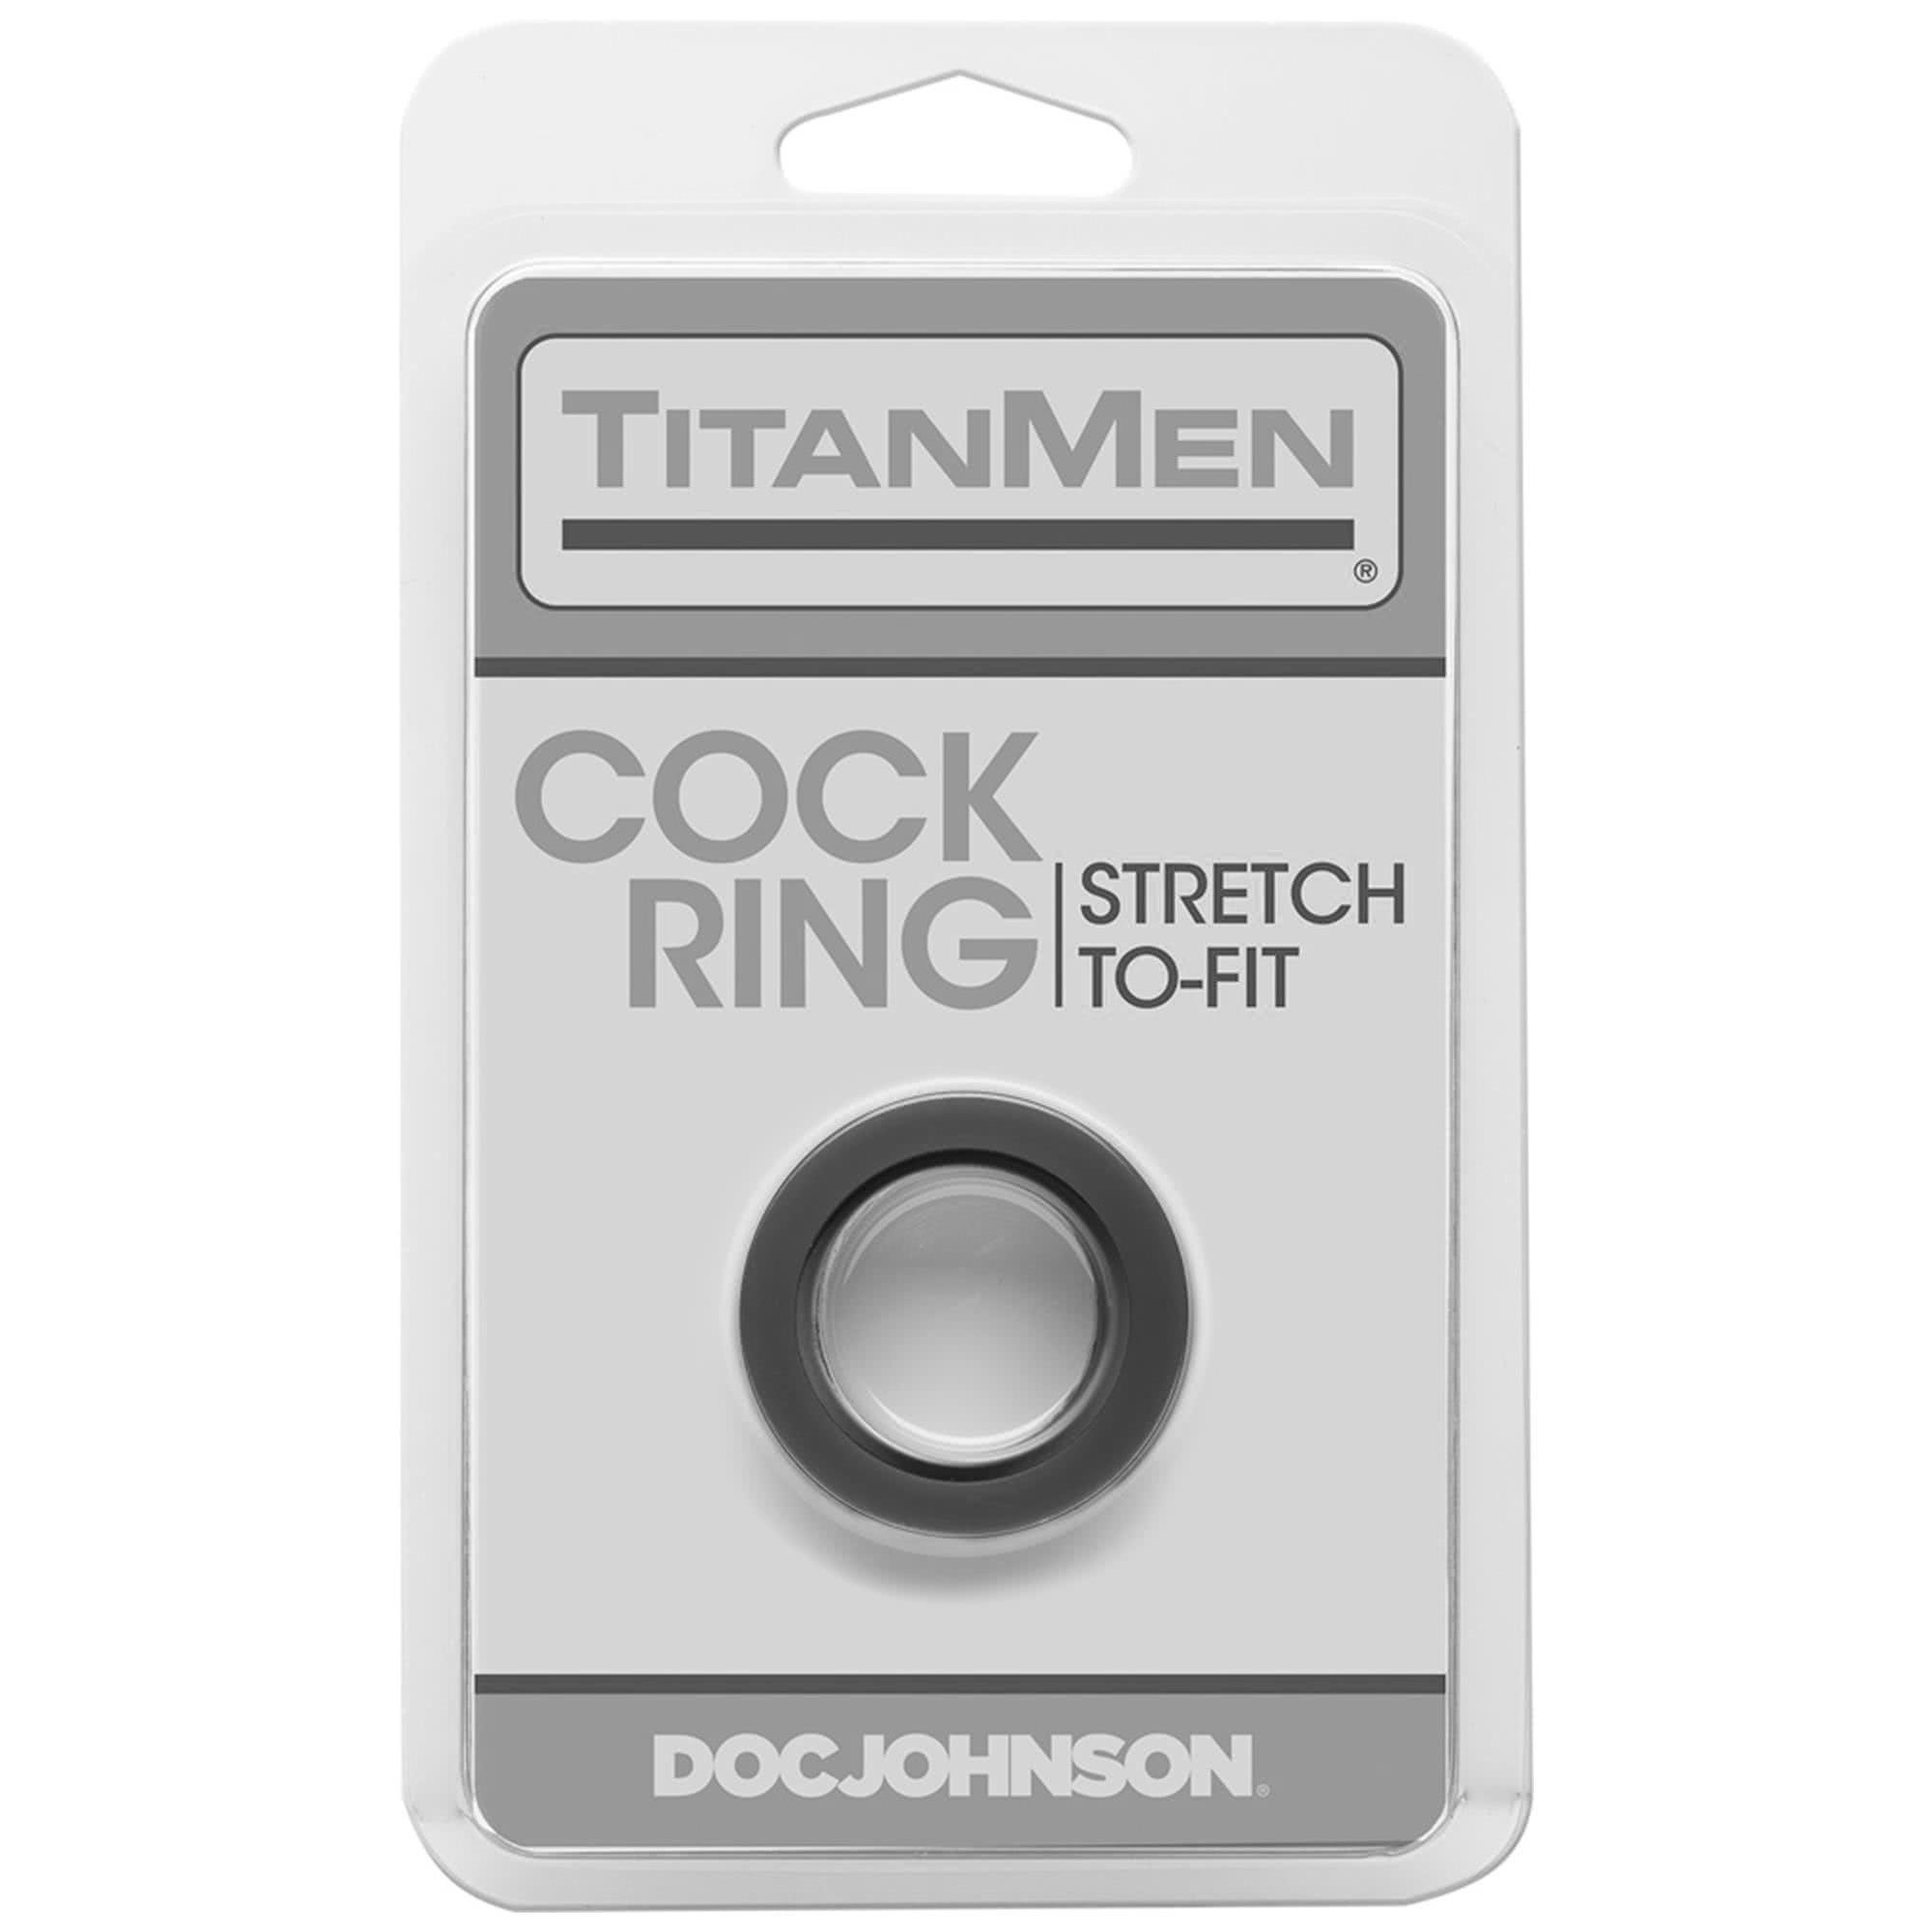 Titanmen Cockring